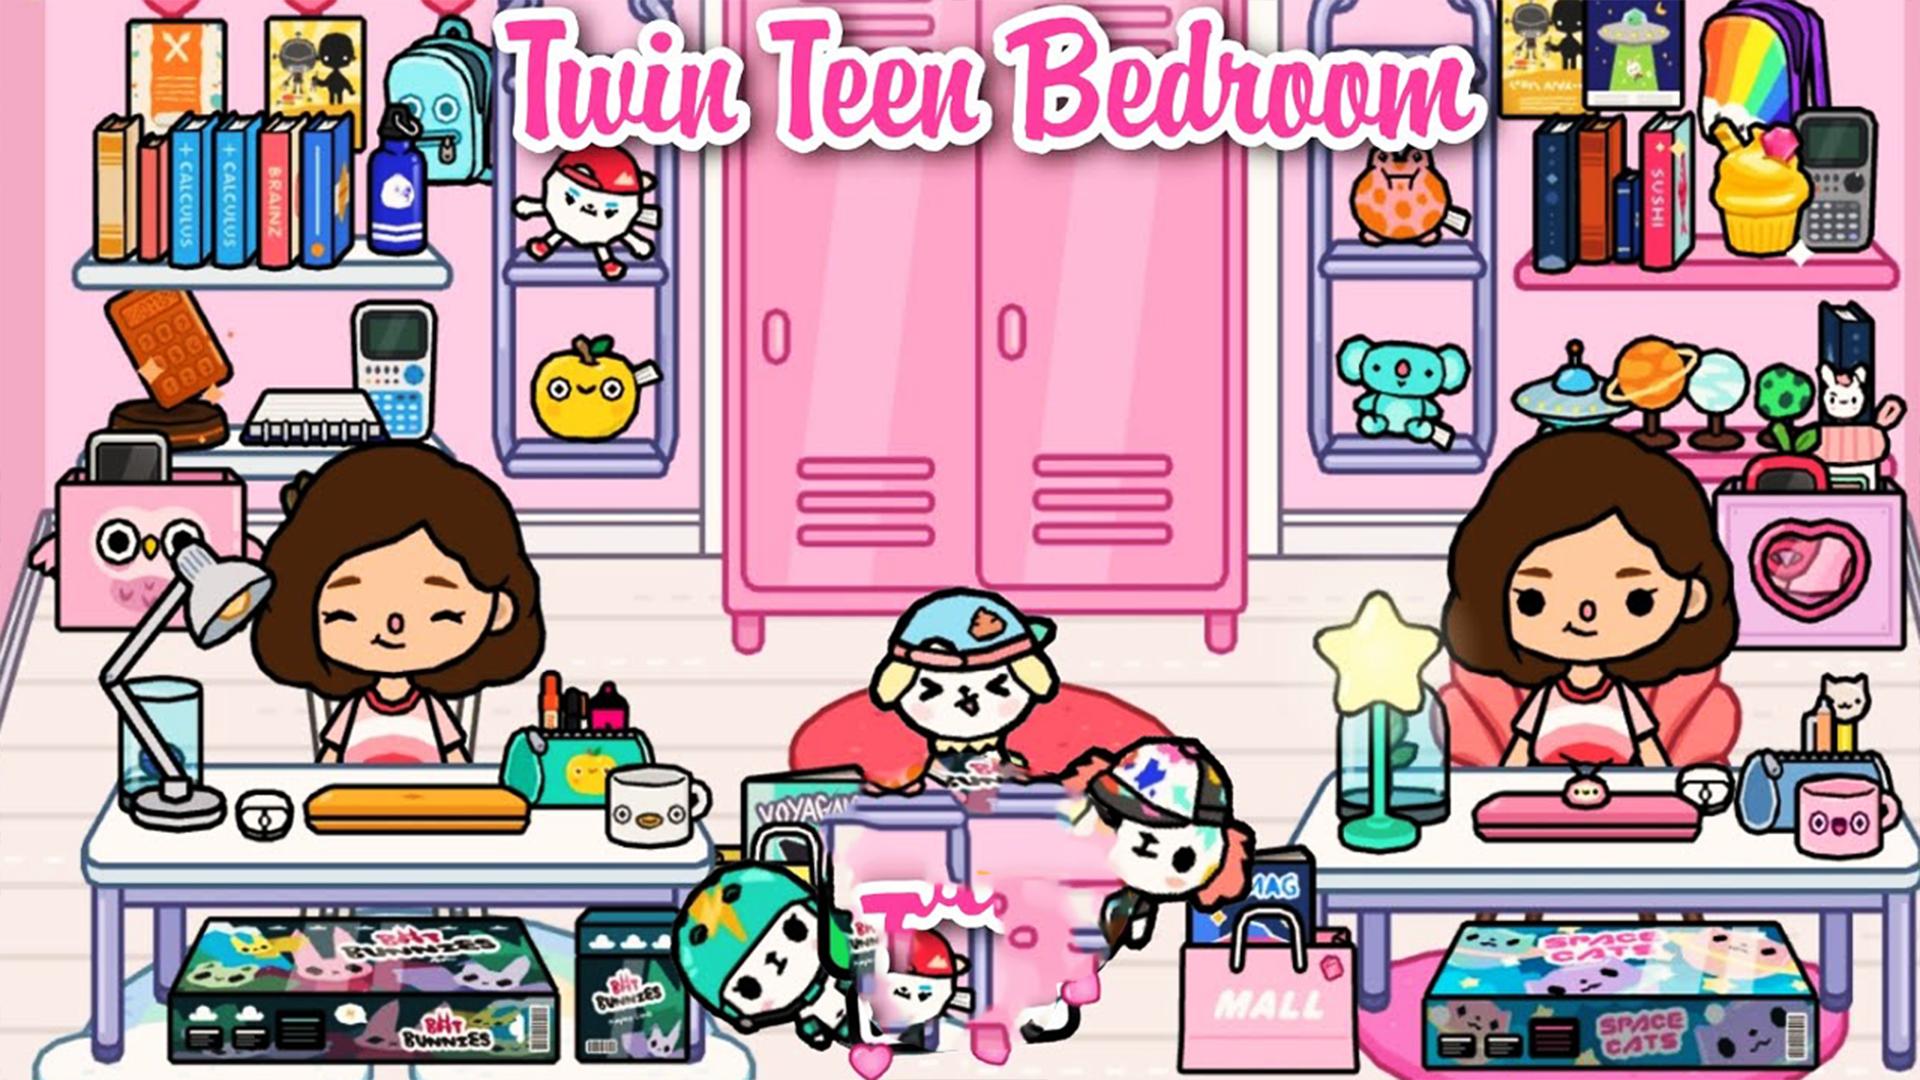 A pink bedroom with a cartoon girl and a cat. - Toca Boca